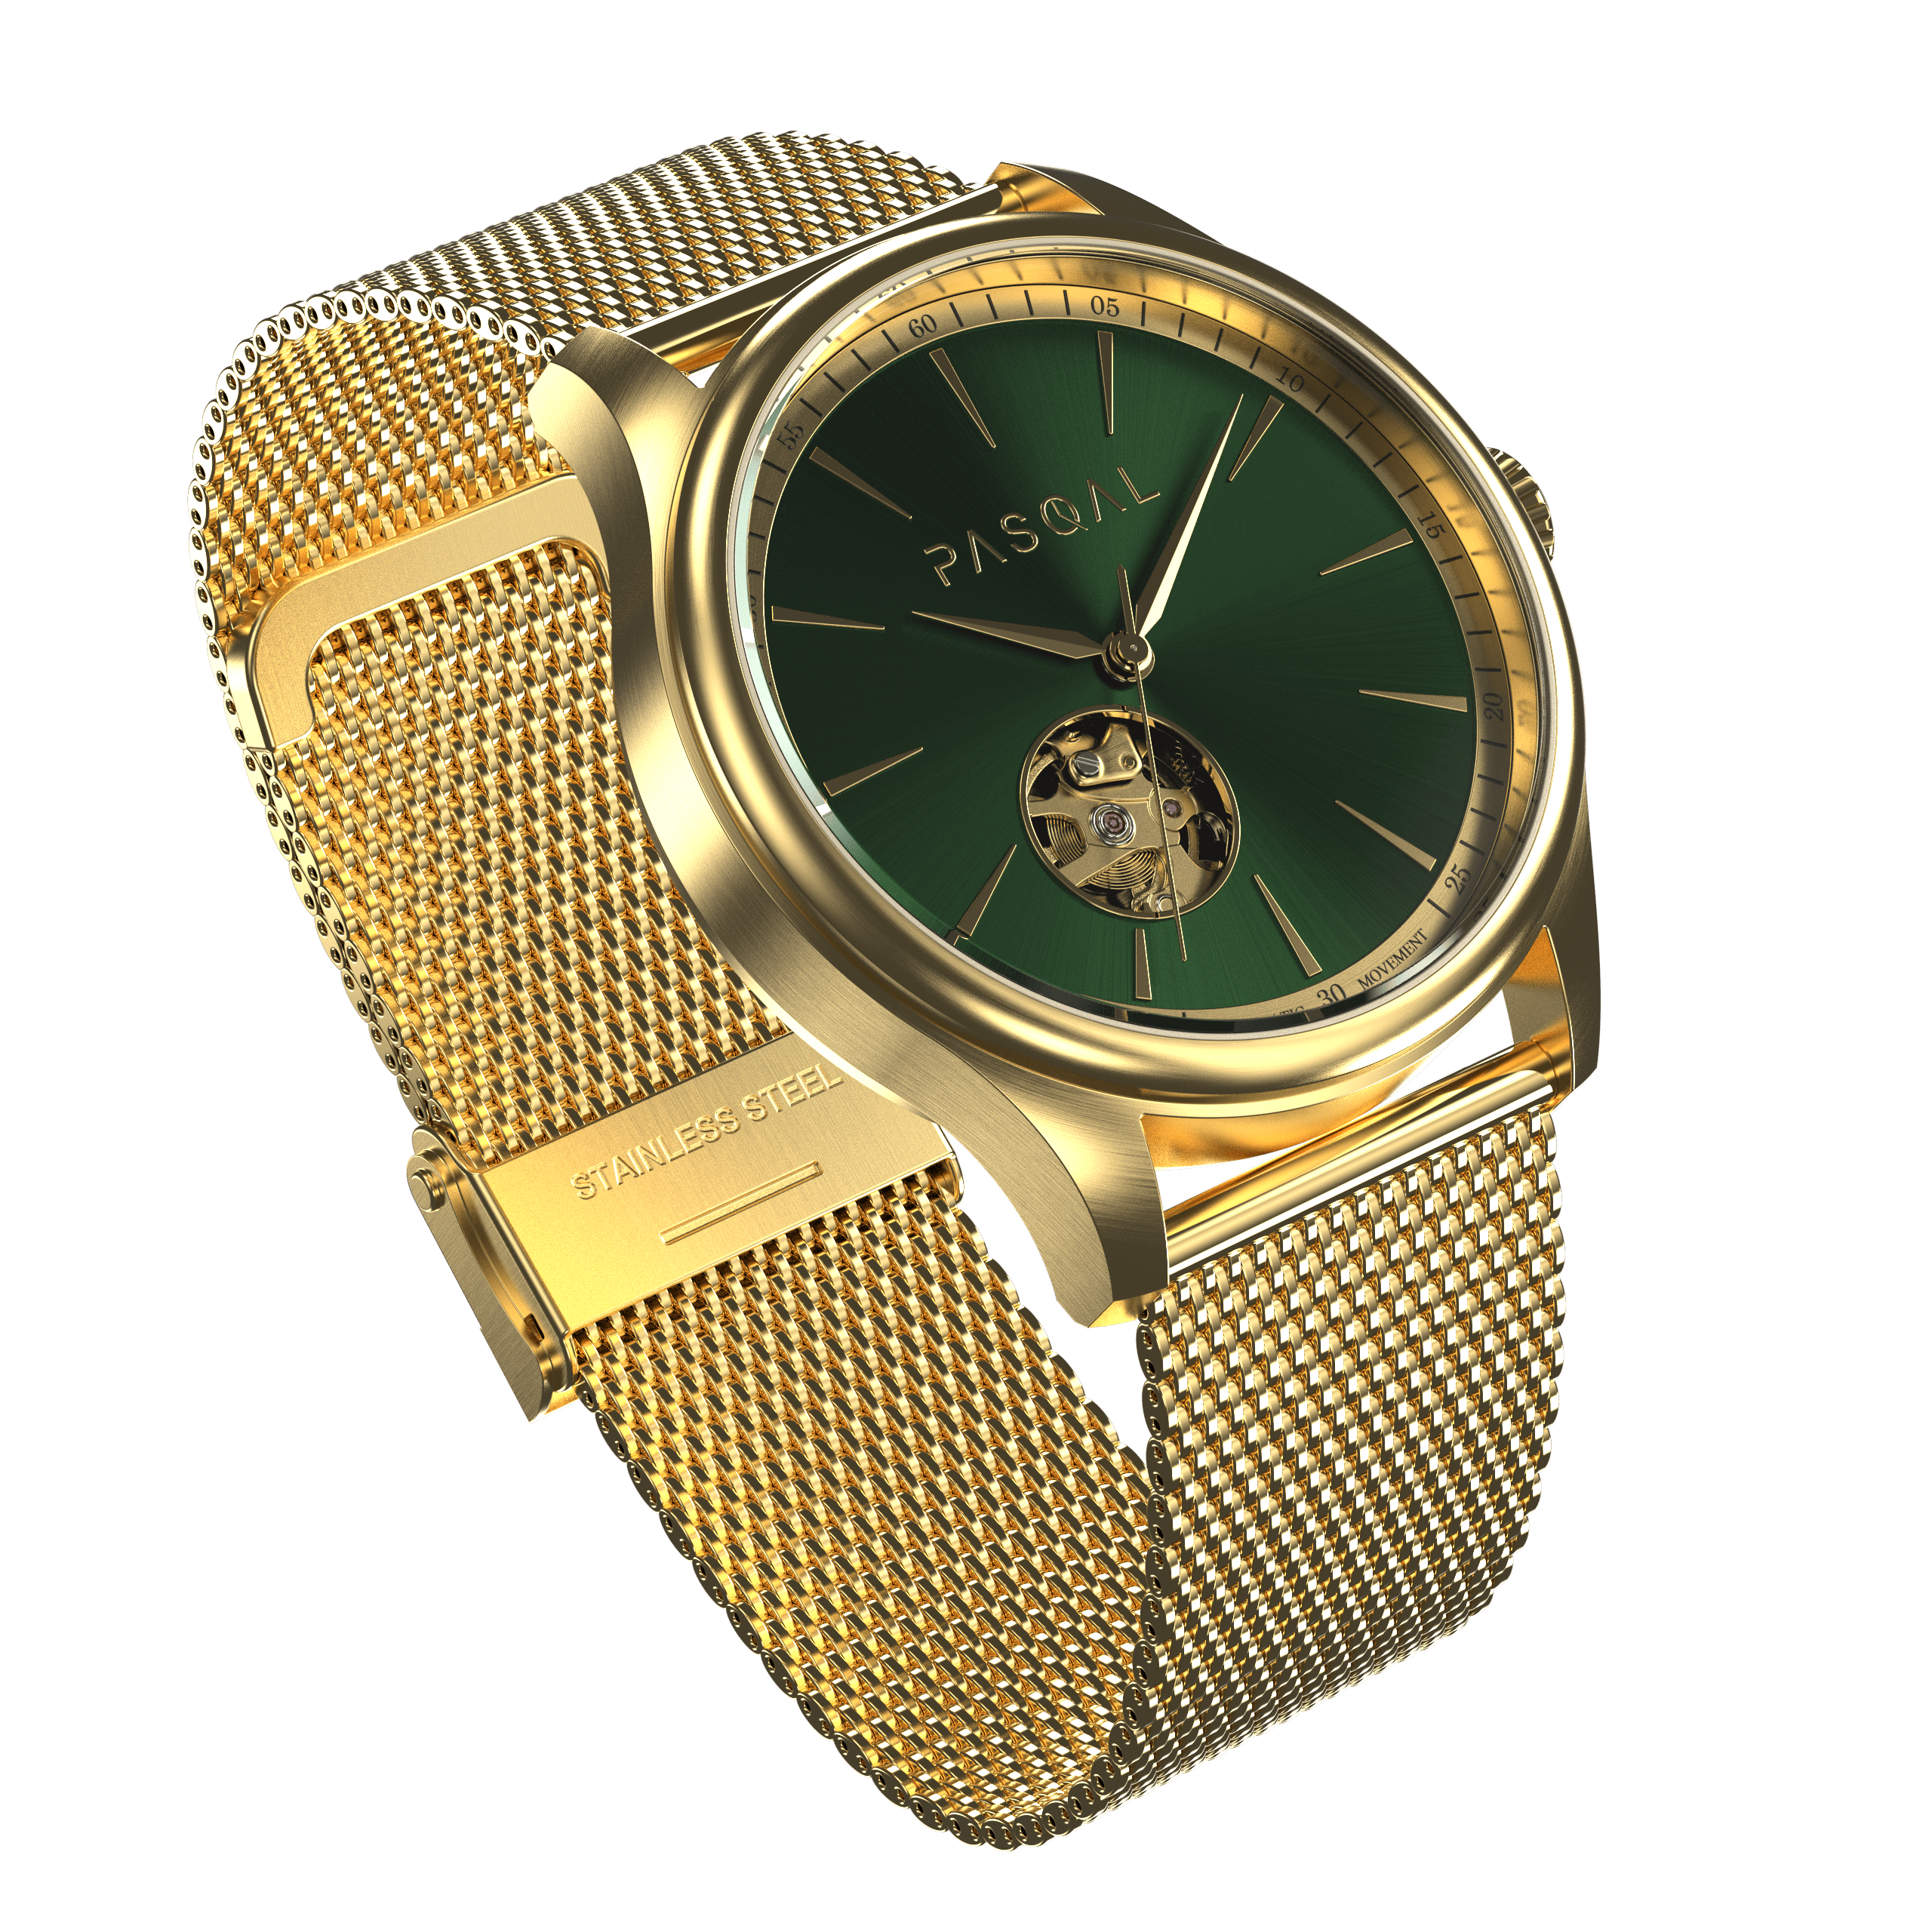 Wilhelm 42 Gold/Green - Pasqal Watches